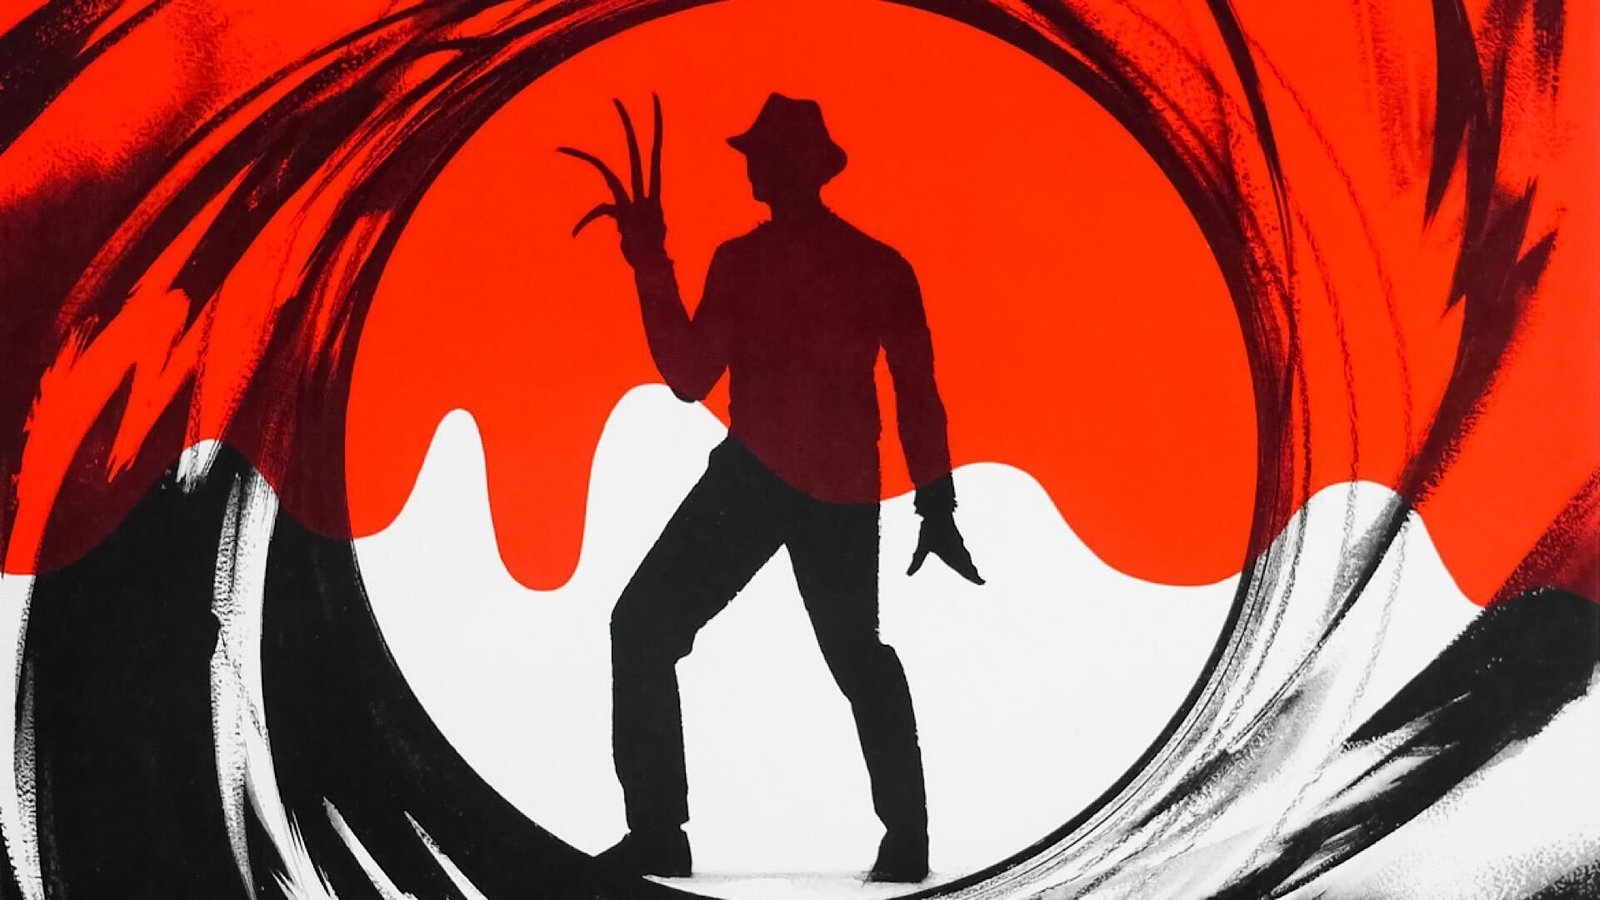 How Freddy Krueger Became Horror's James Bond According to Nightmare on Elm Street 4 Director